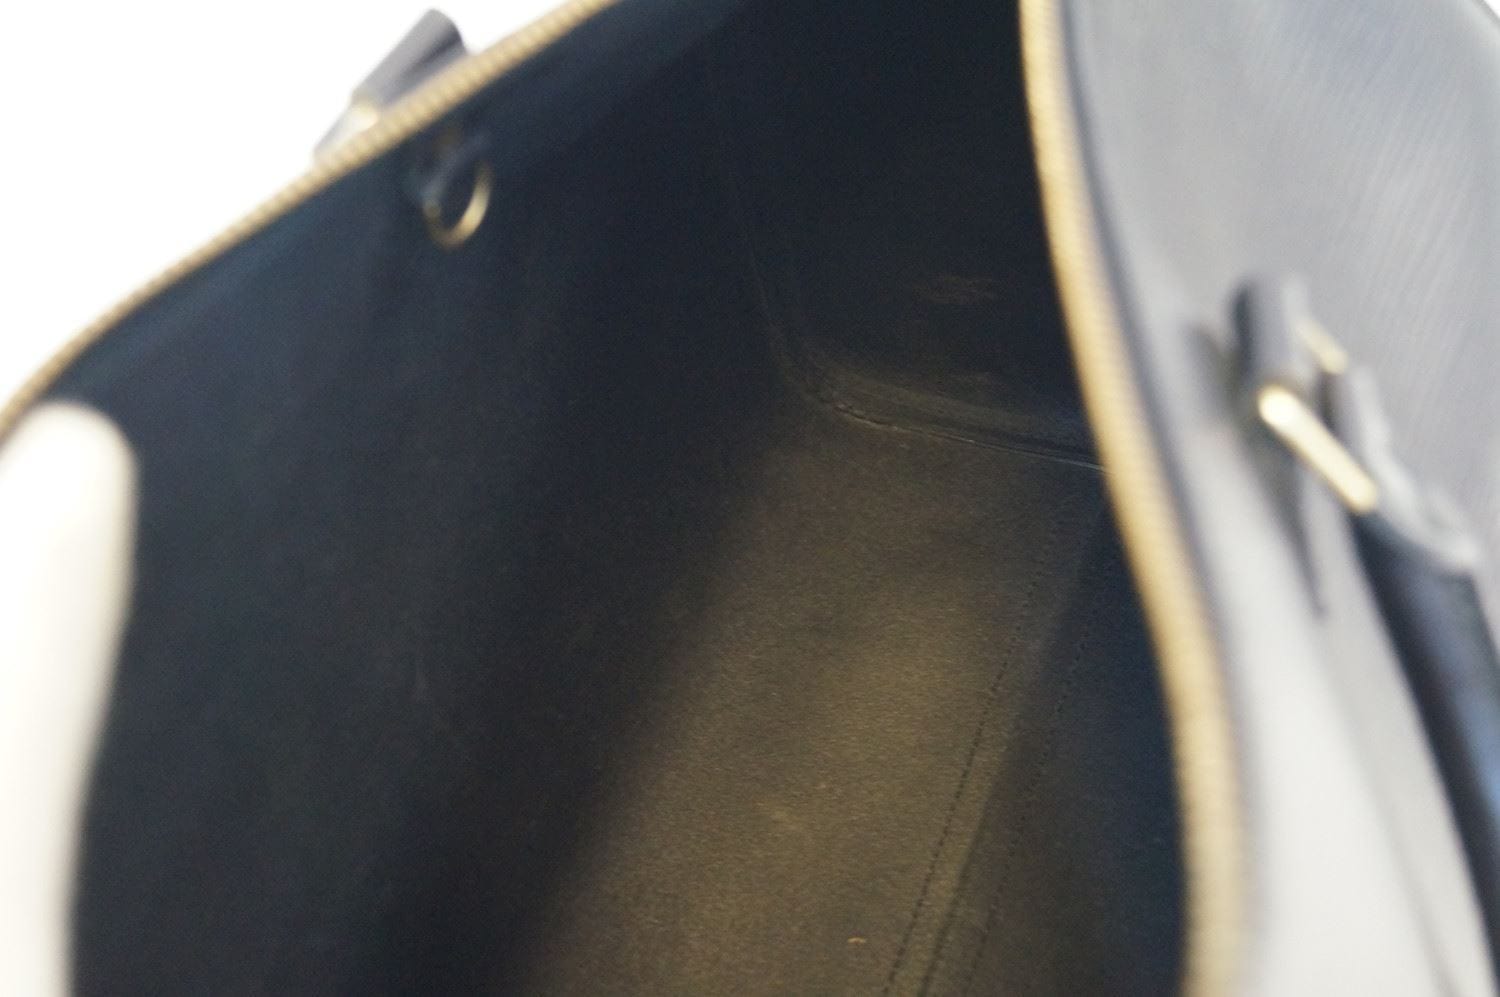 Authentic LOUIS VUITTON Epi Leather Black Speedy 35 Handbag TT1143